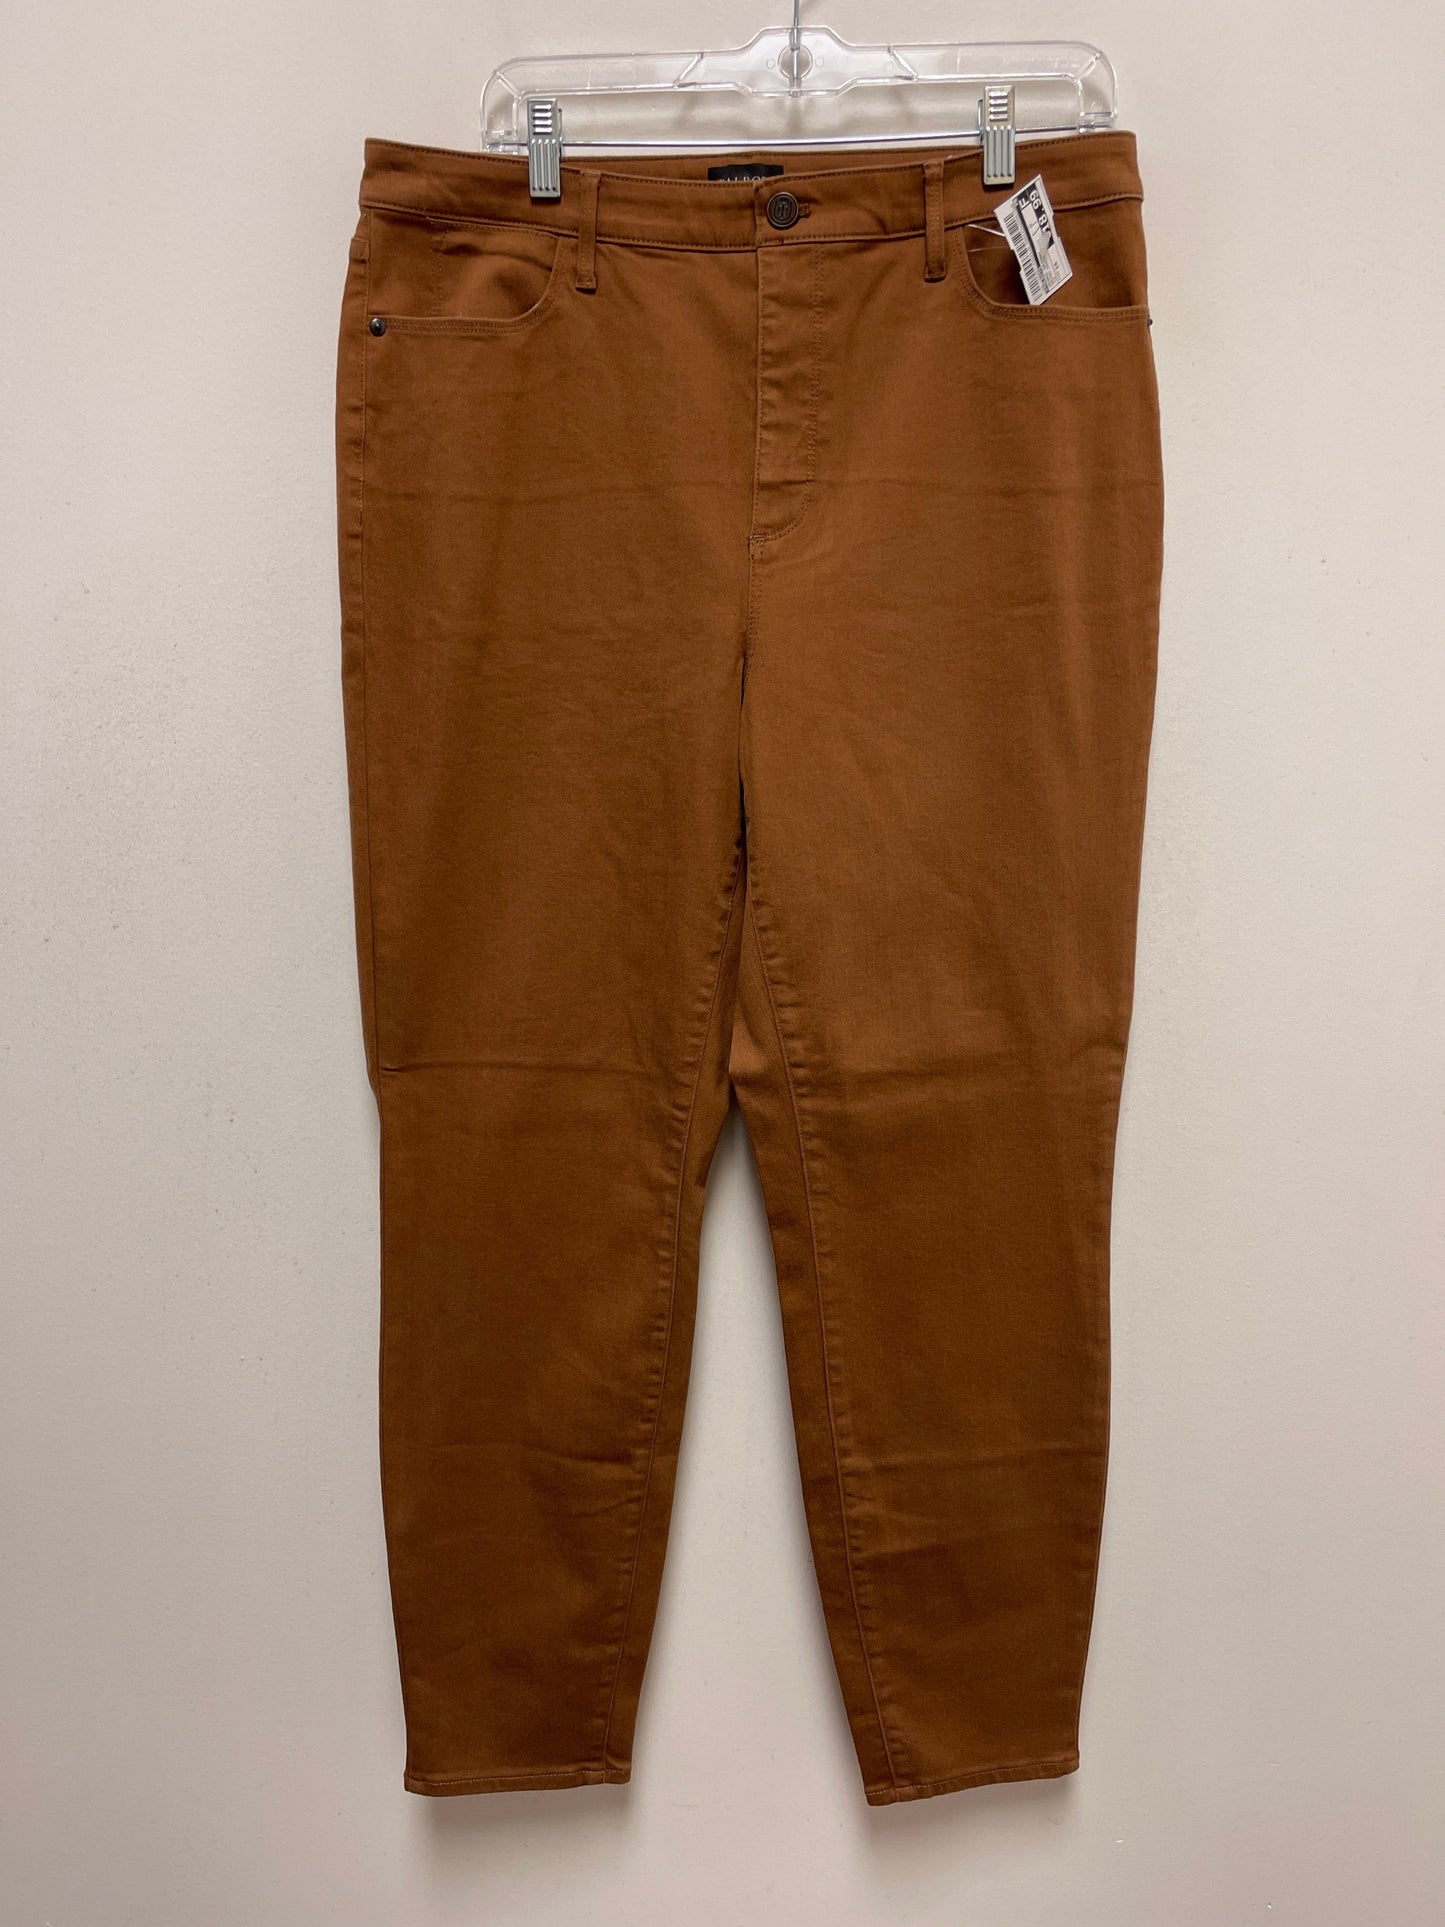 Brown Denim Jeans Skinny Talbots, Size 14